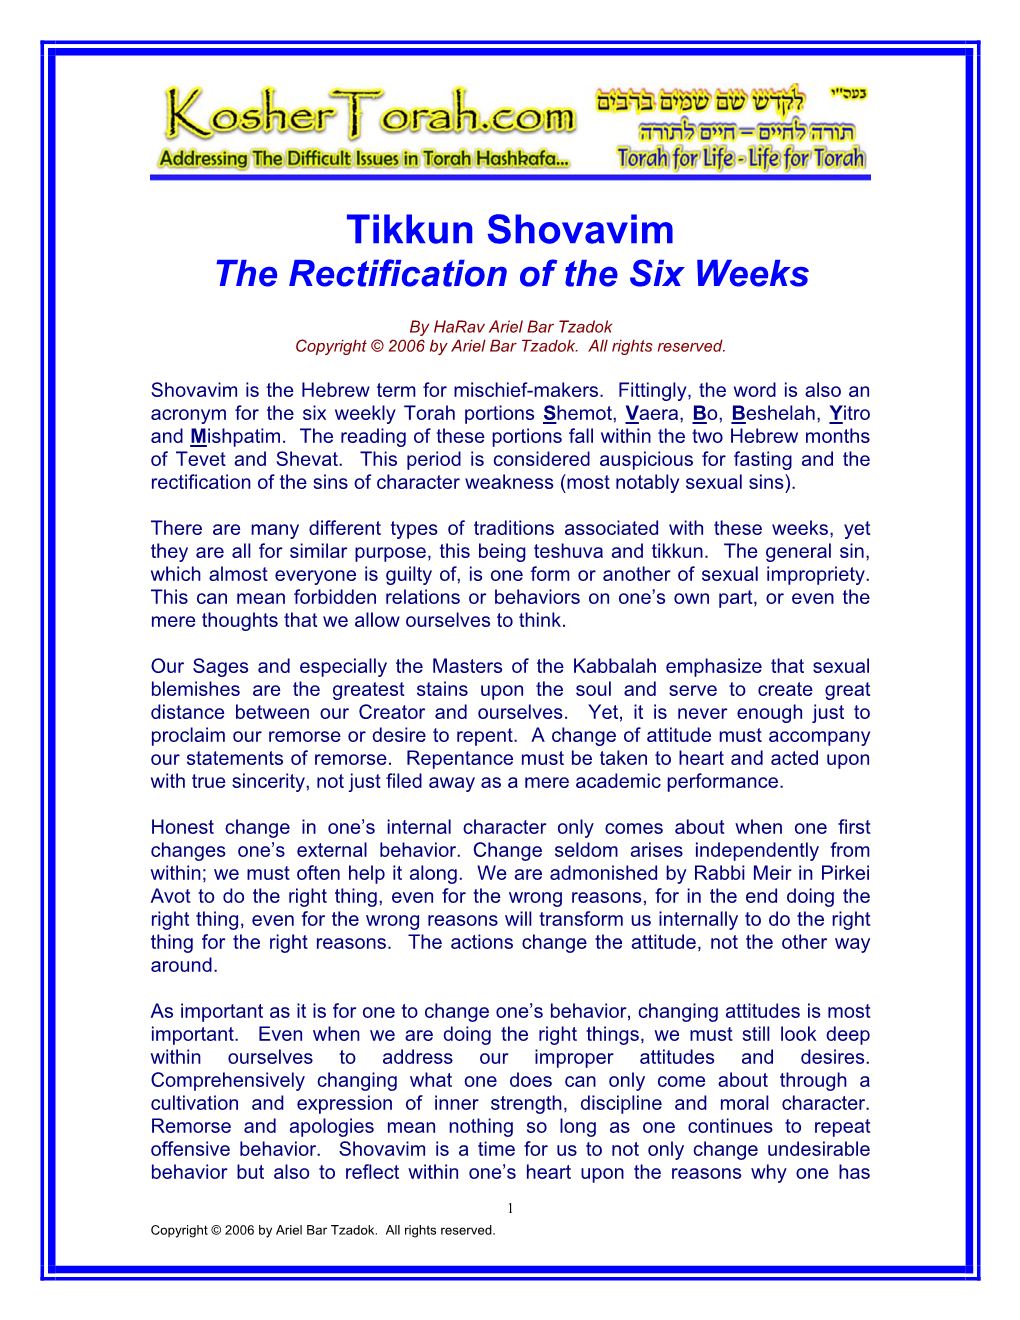 Tikkun Shovavim the Rectification of the Six Weeks